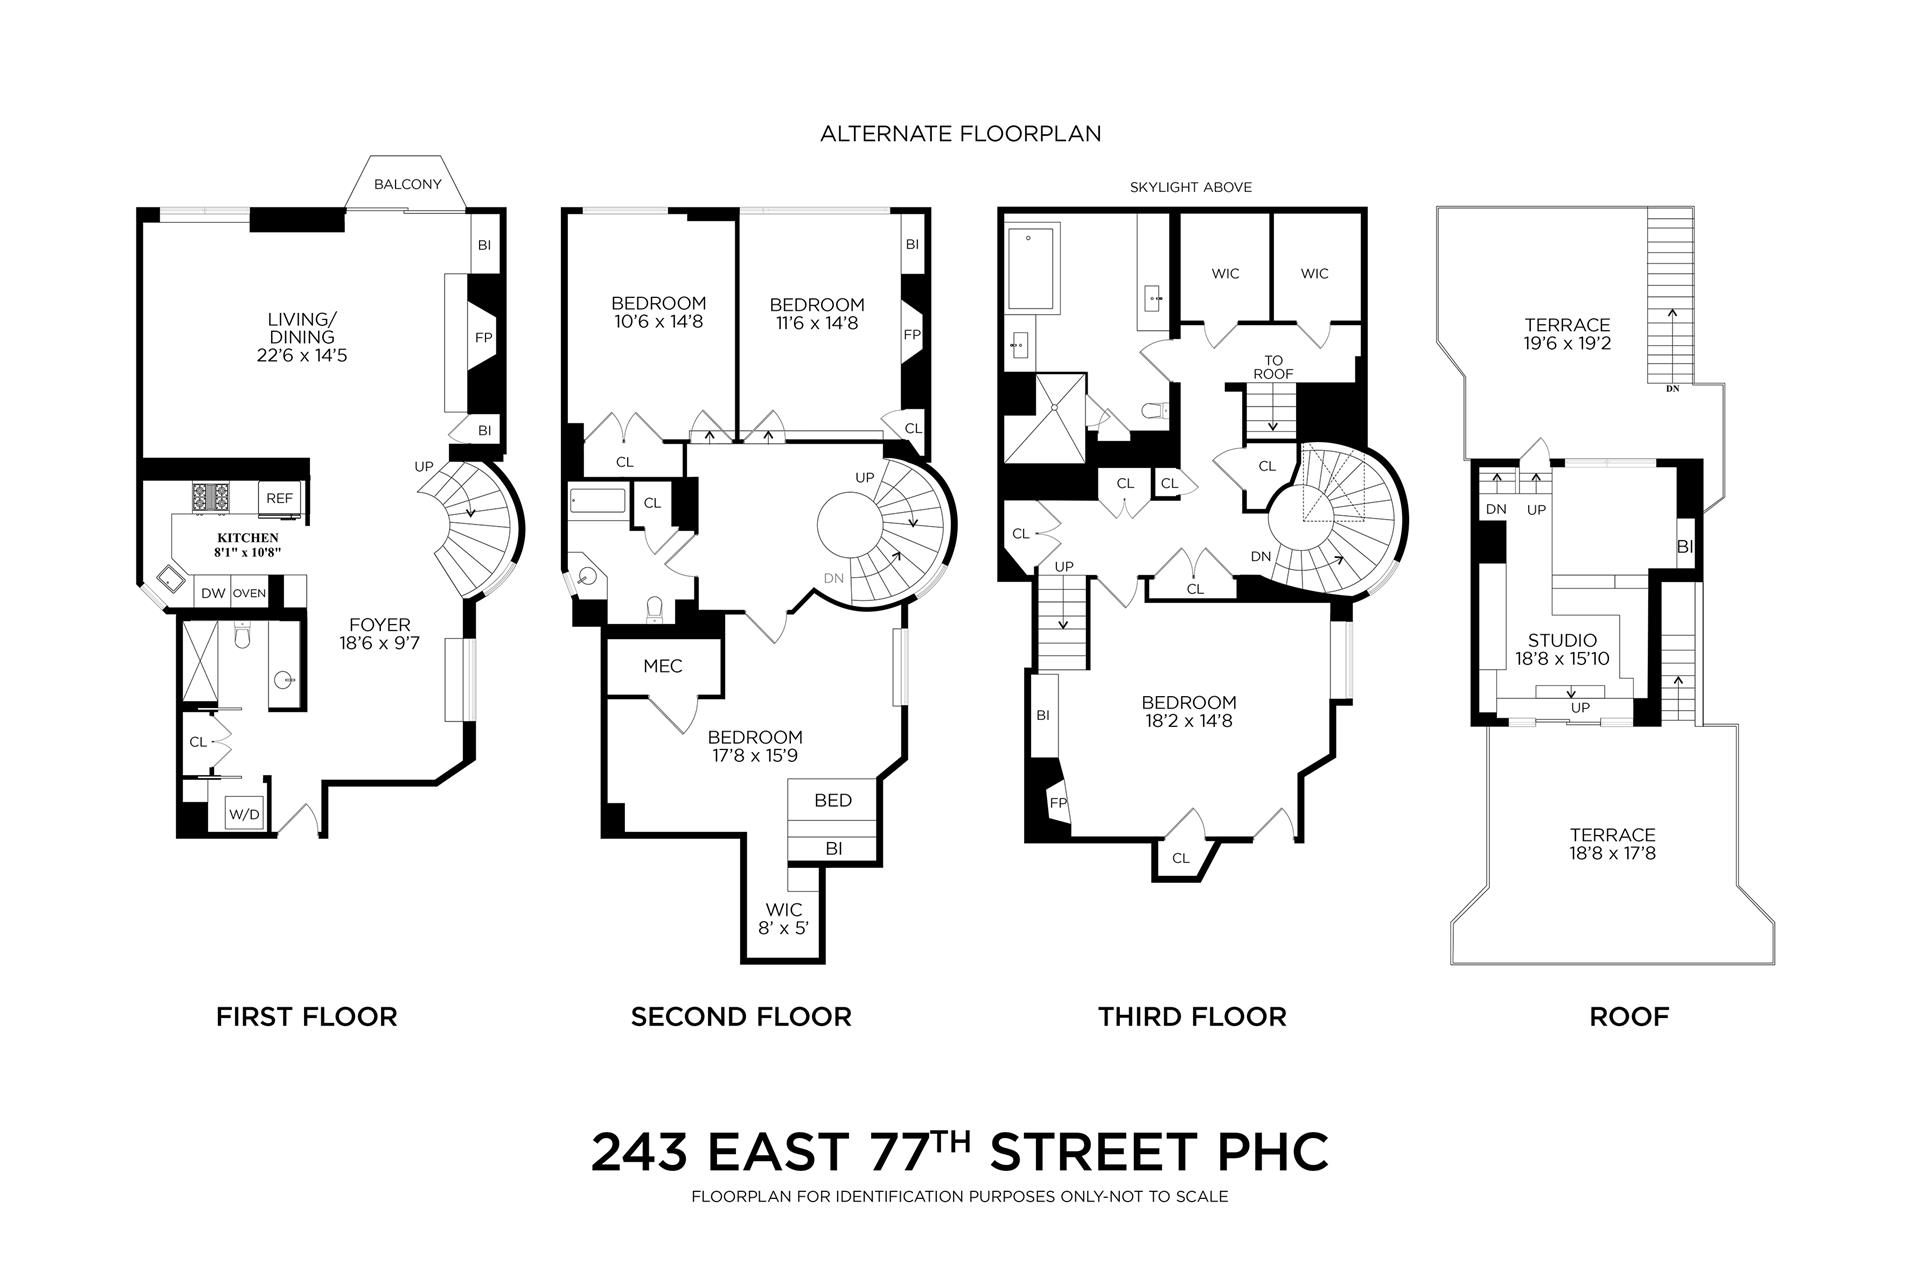 Floorplan for 243 East 77th Street, PHA